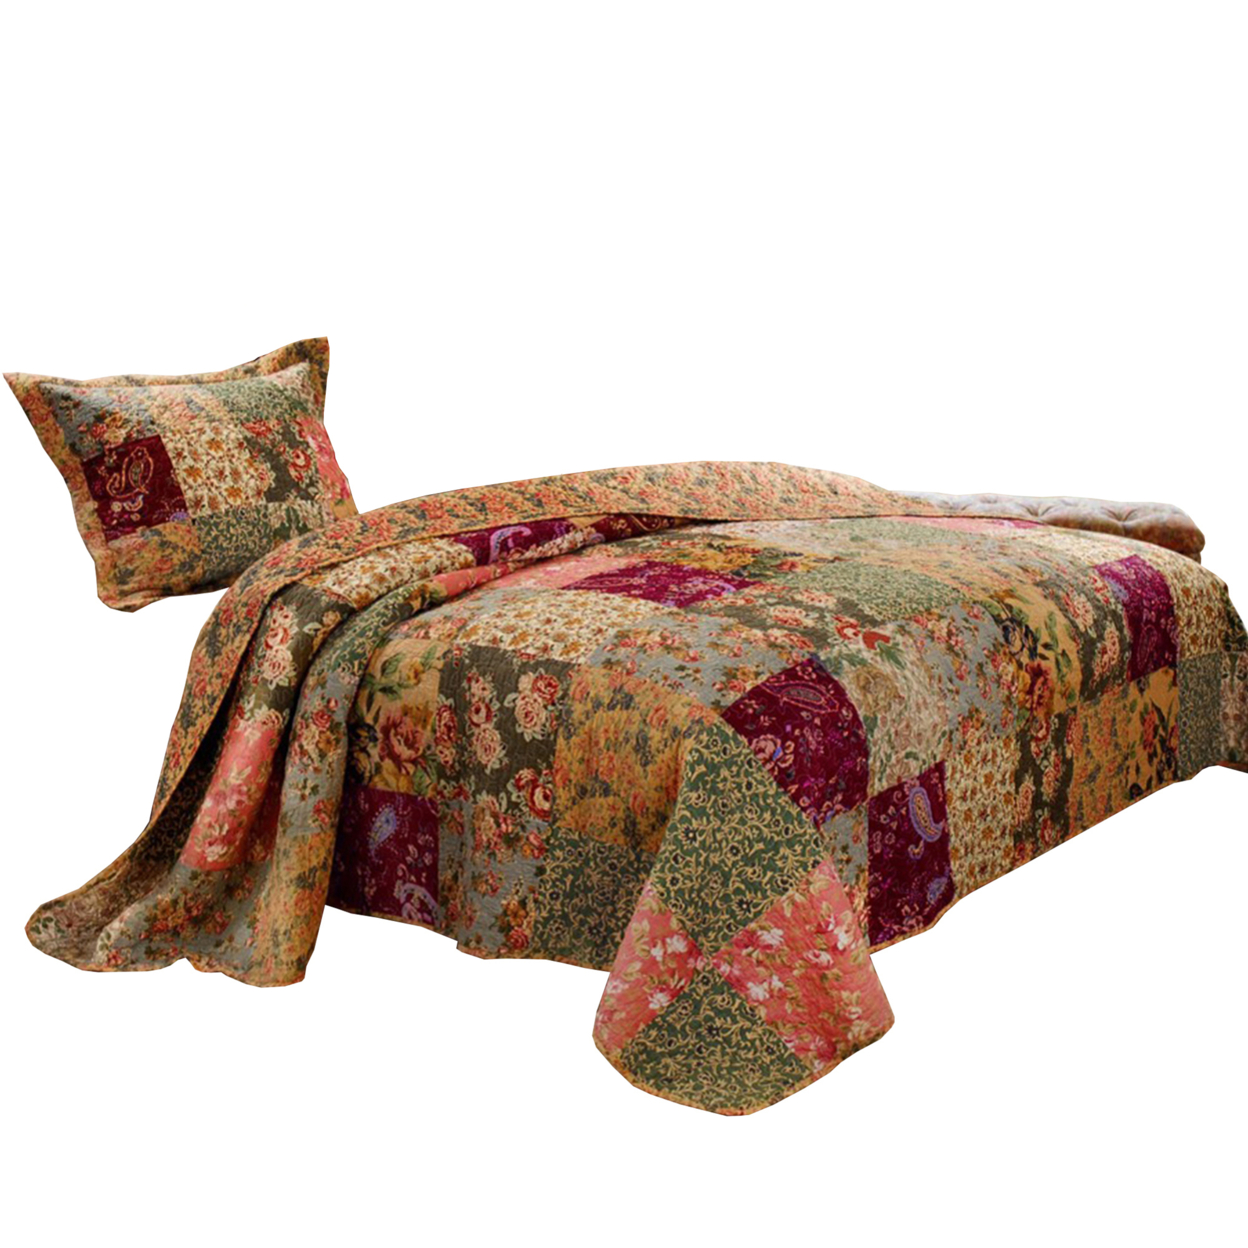 Kamet 2 Piece Fabric Twin Size Bedspread Set With Floral Prints, Multicolor- Saltoro Sherpi